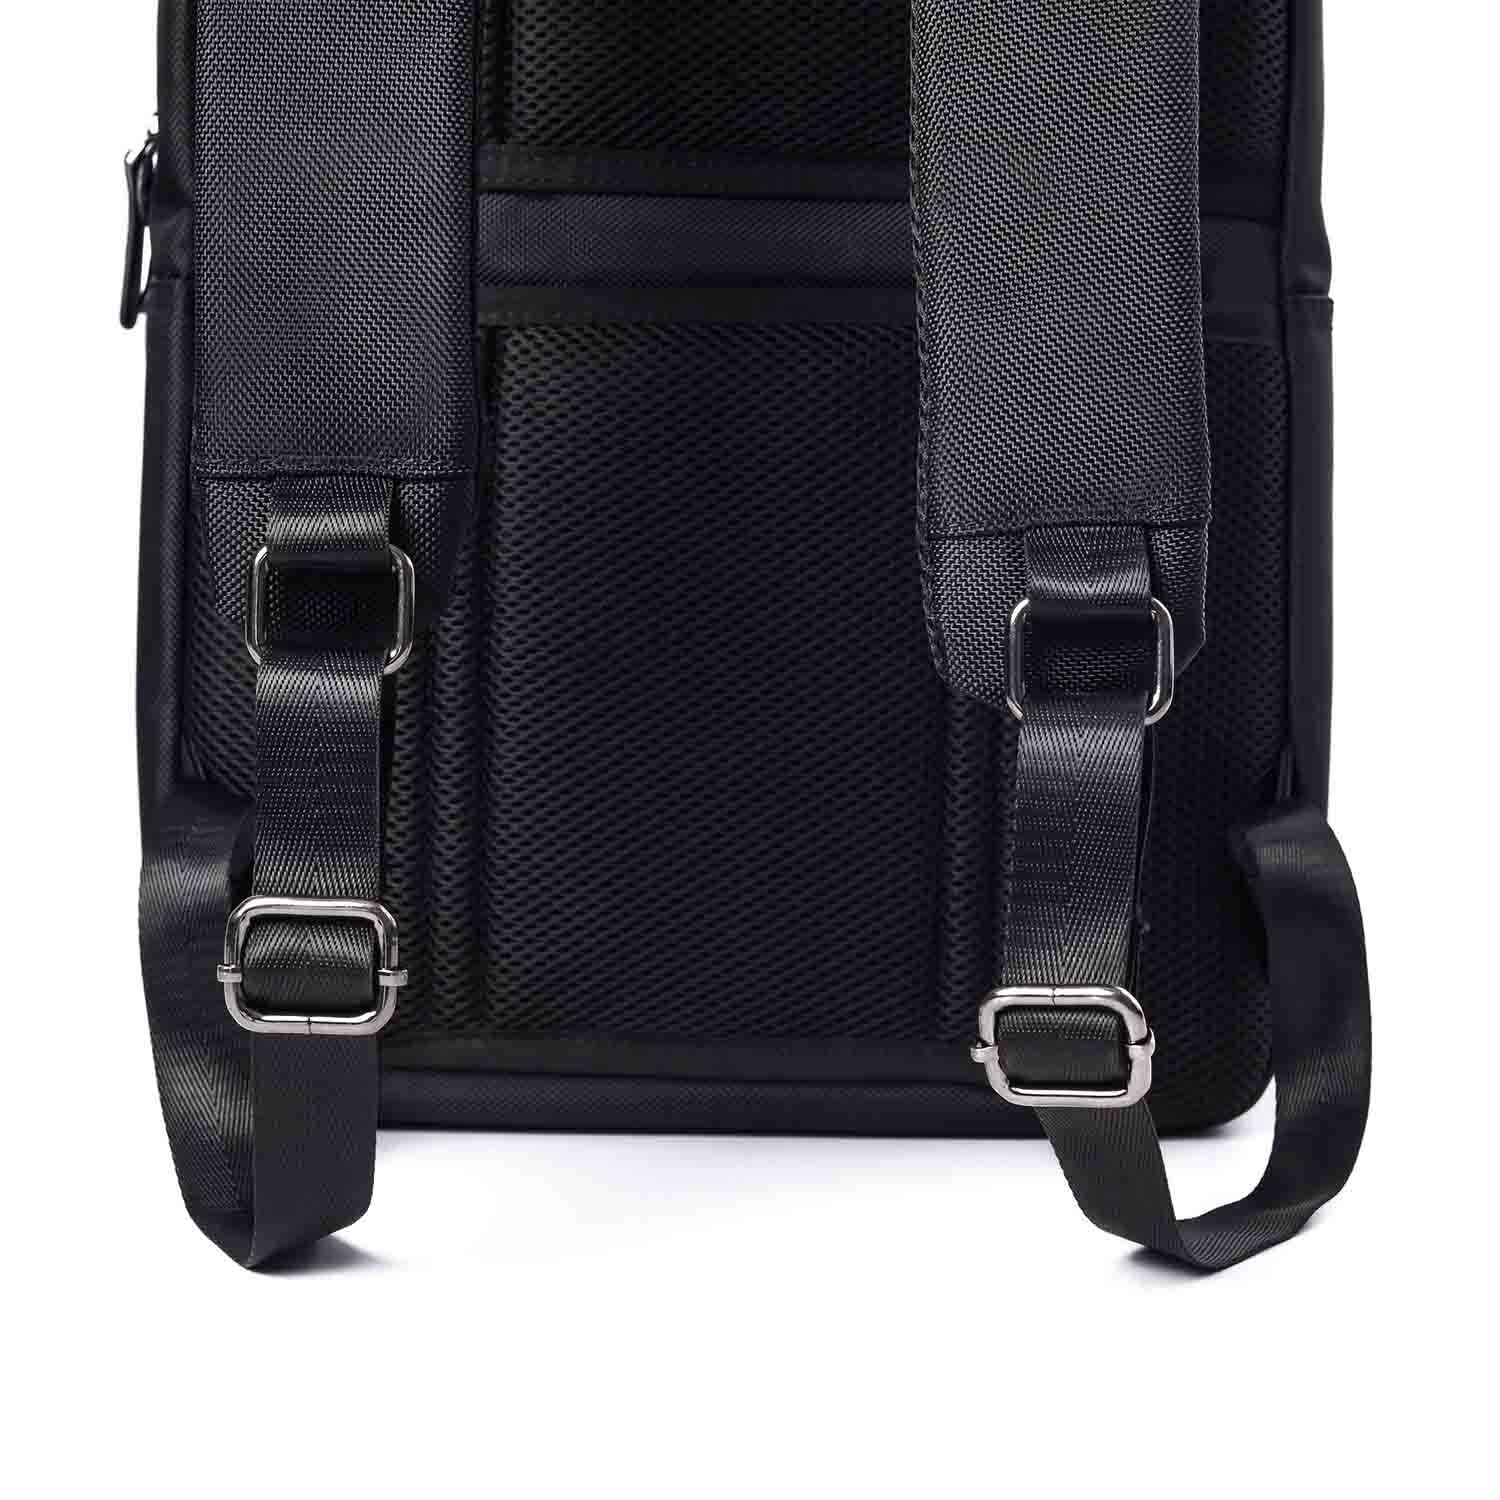 Timus-Lifestyle-backpacks-professional-laptop-backpack-oslo-oslo-laptop-backpack-5